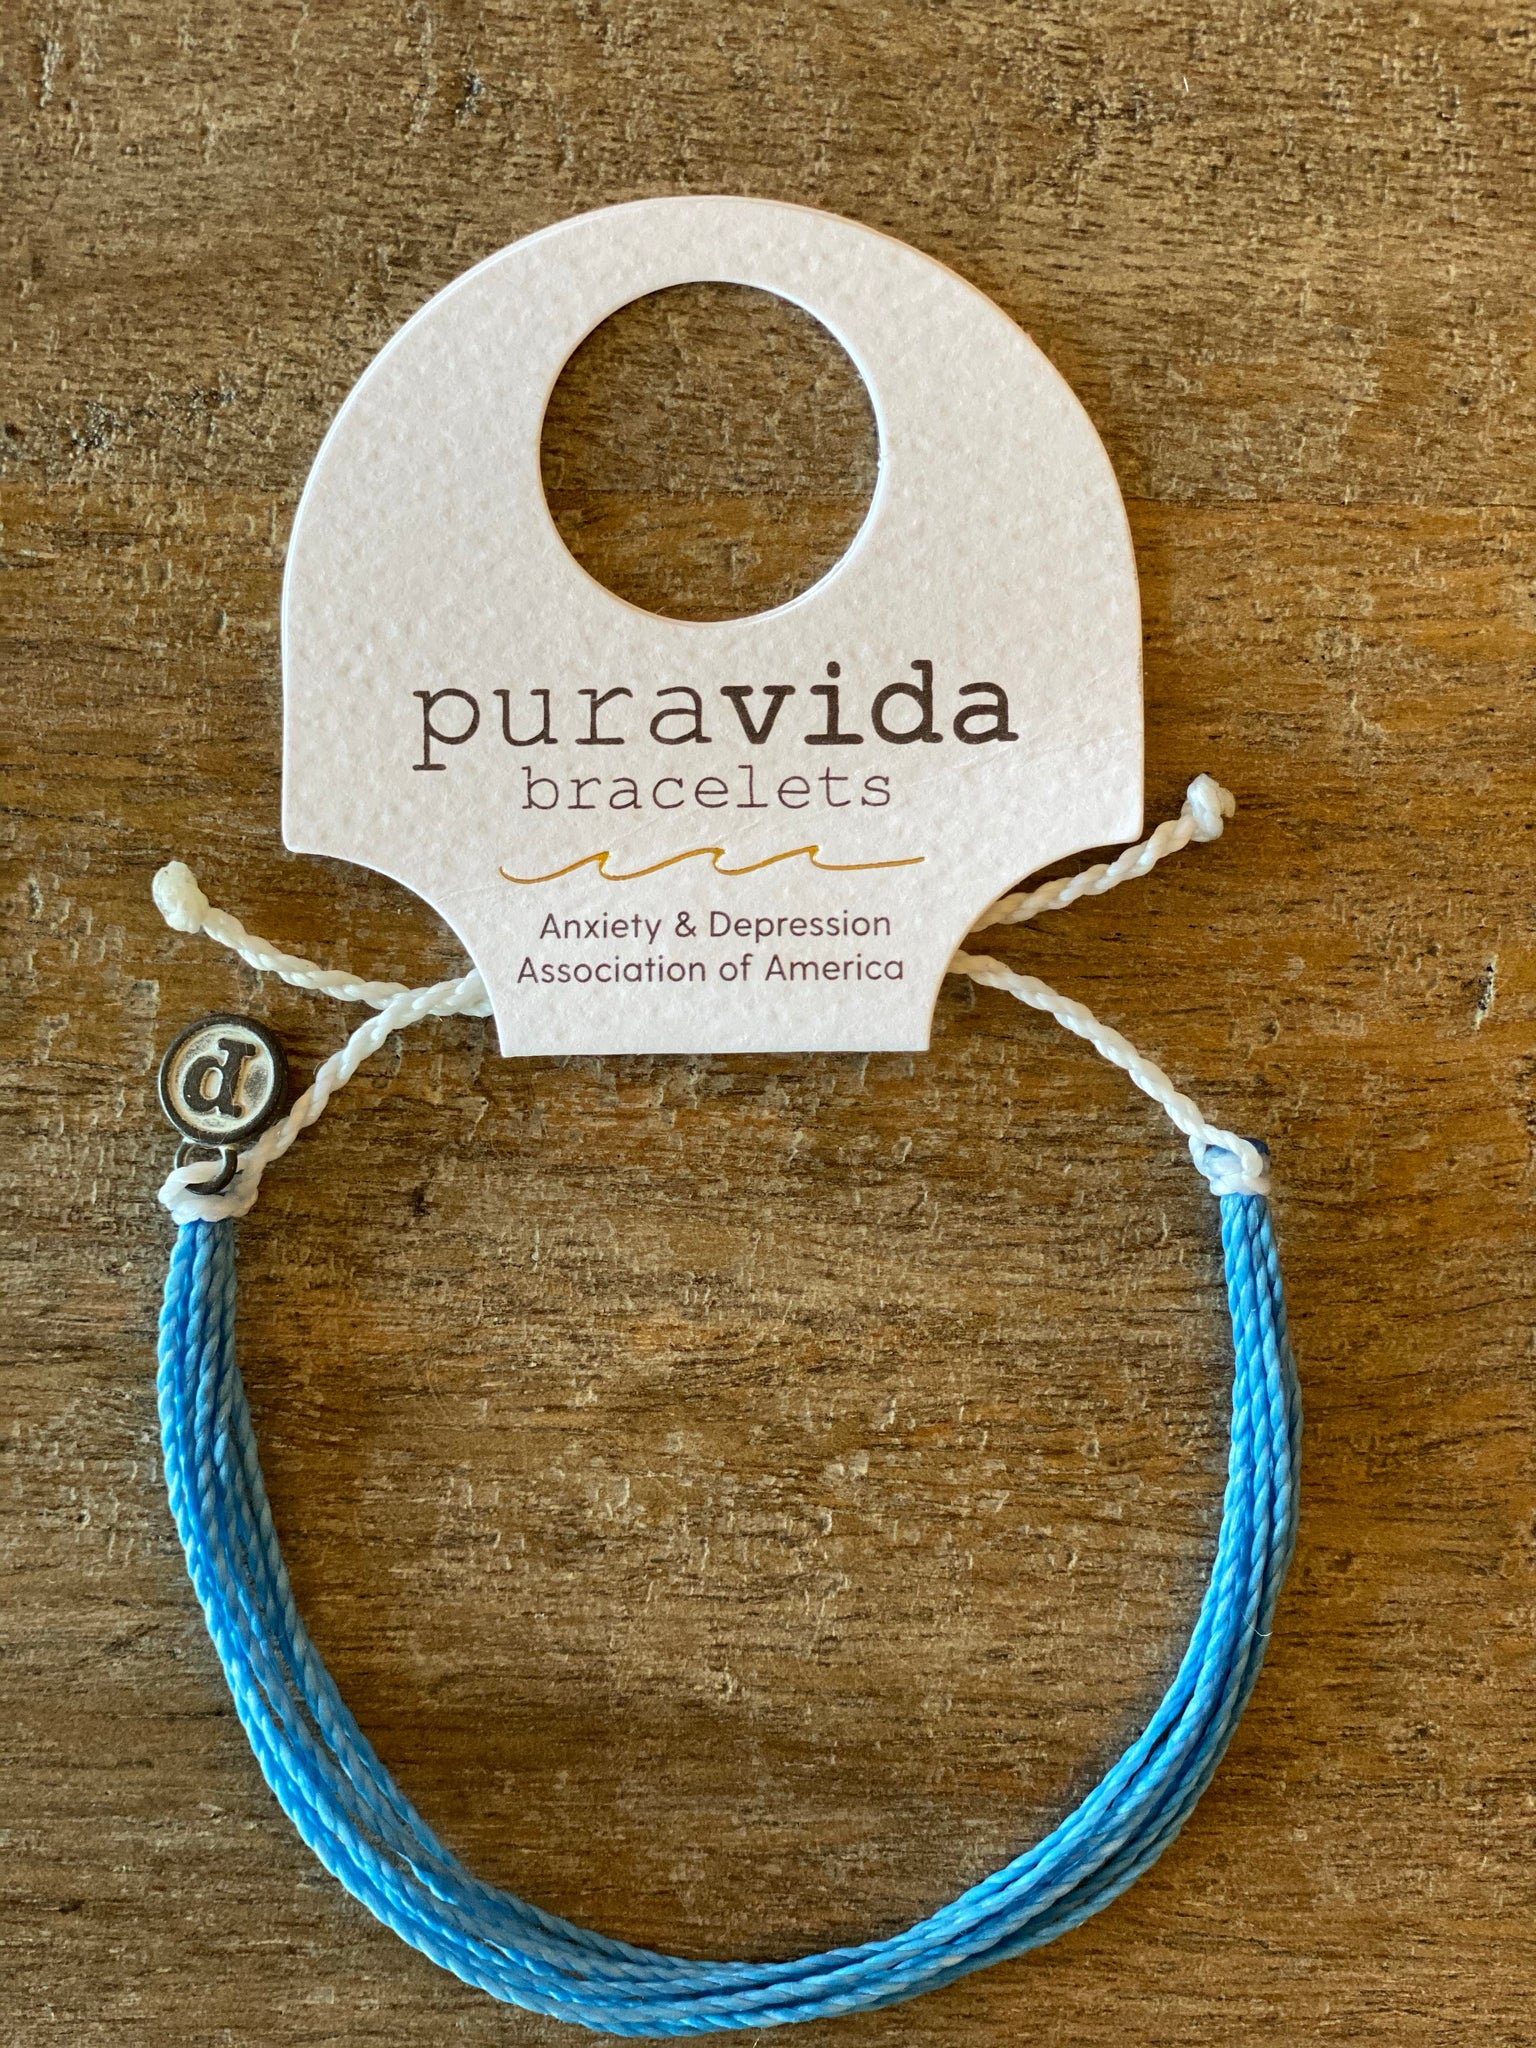 Charity Bracelet